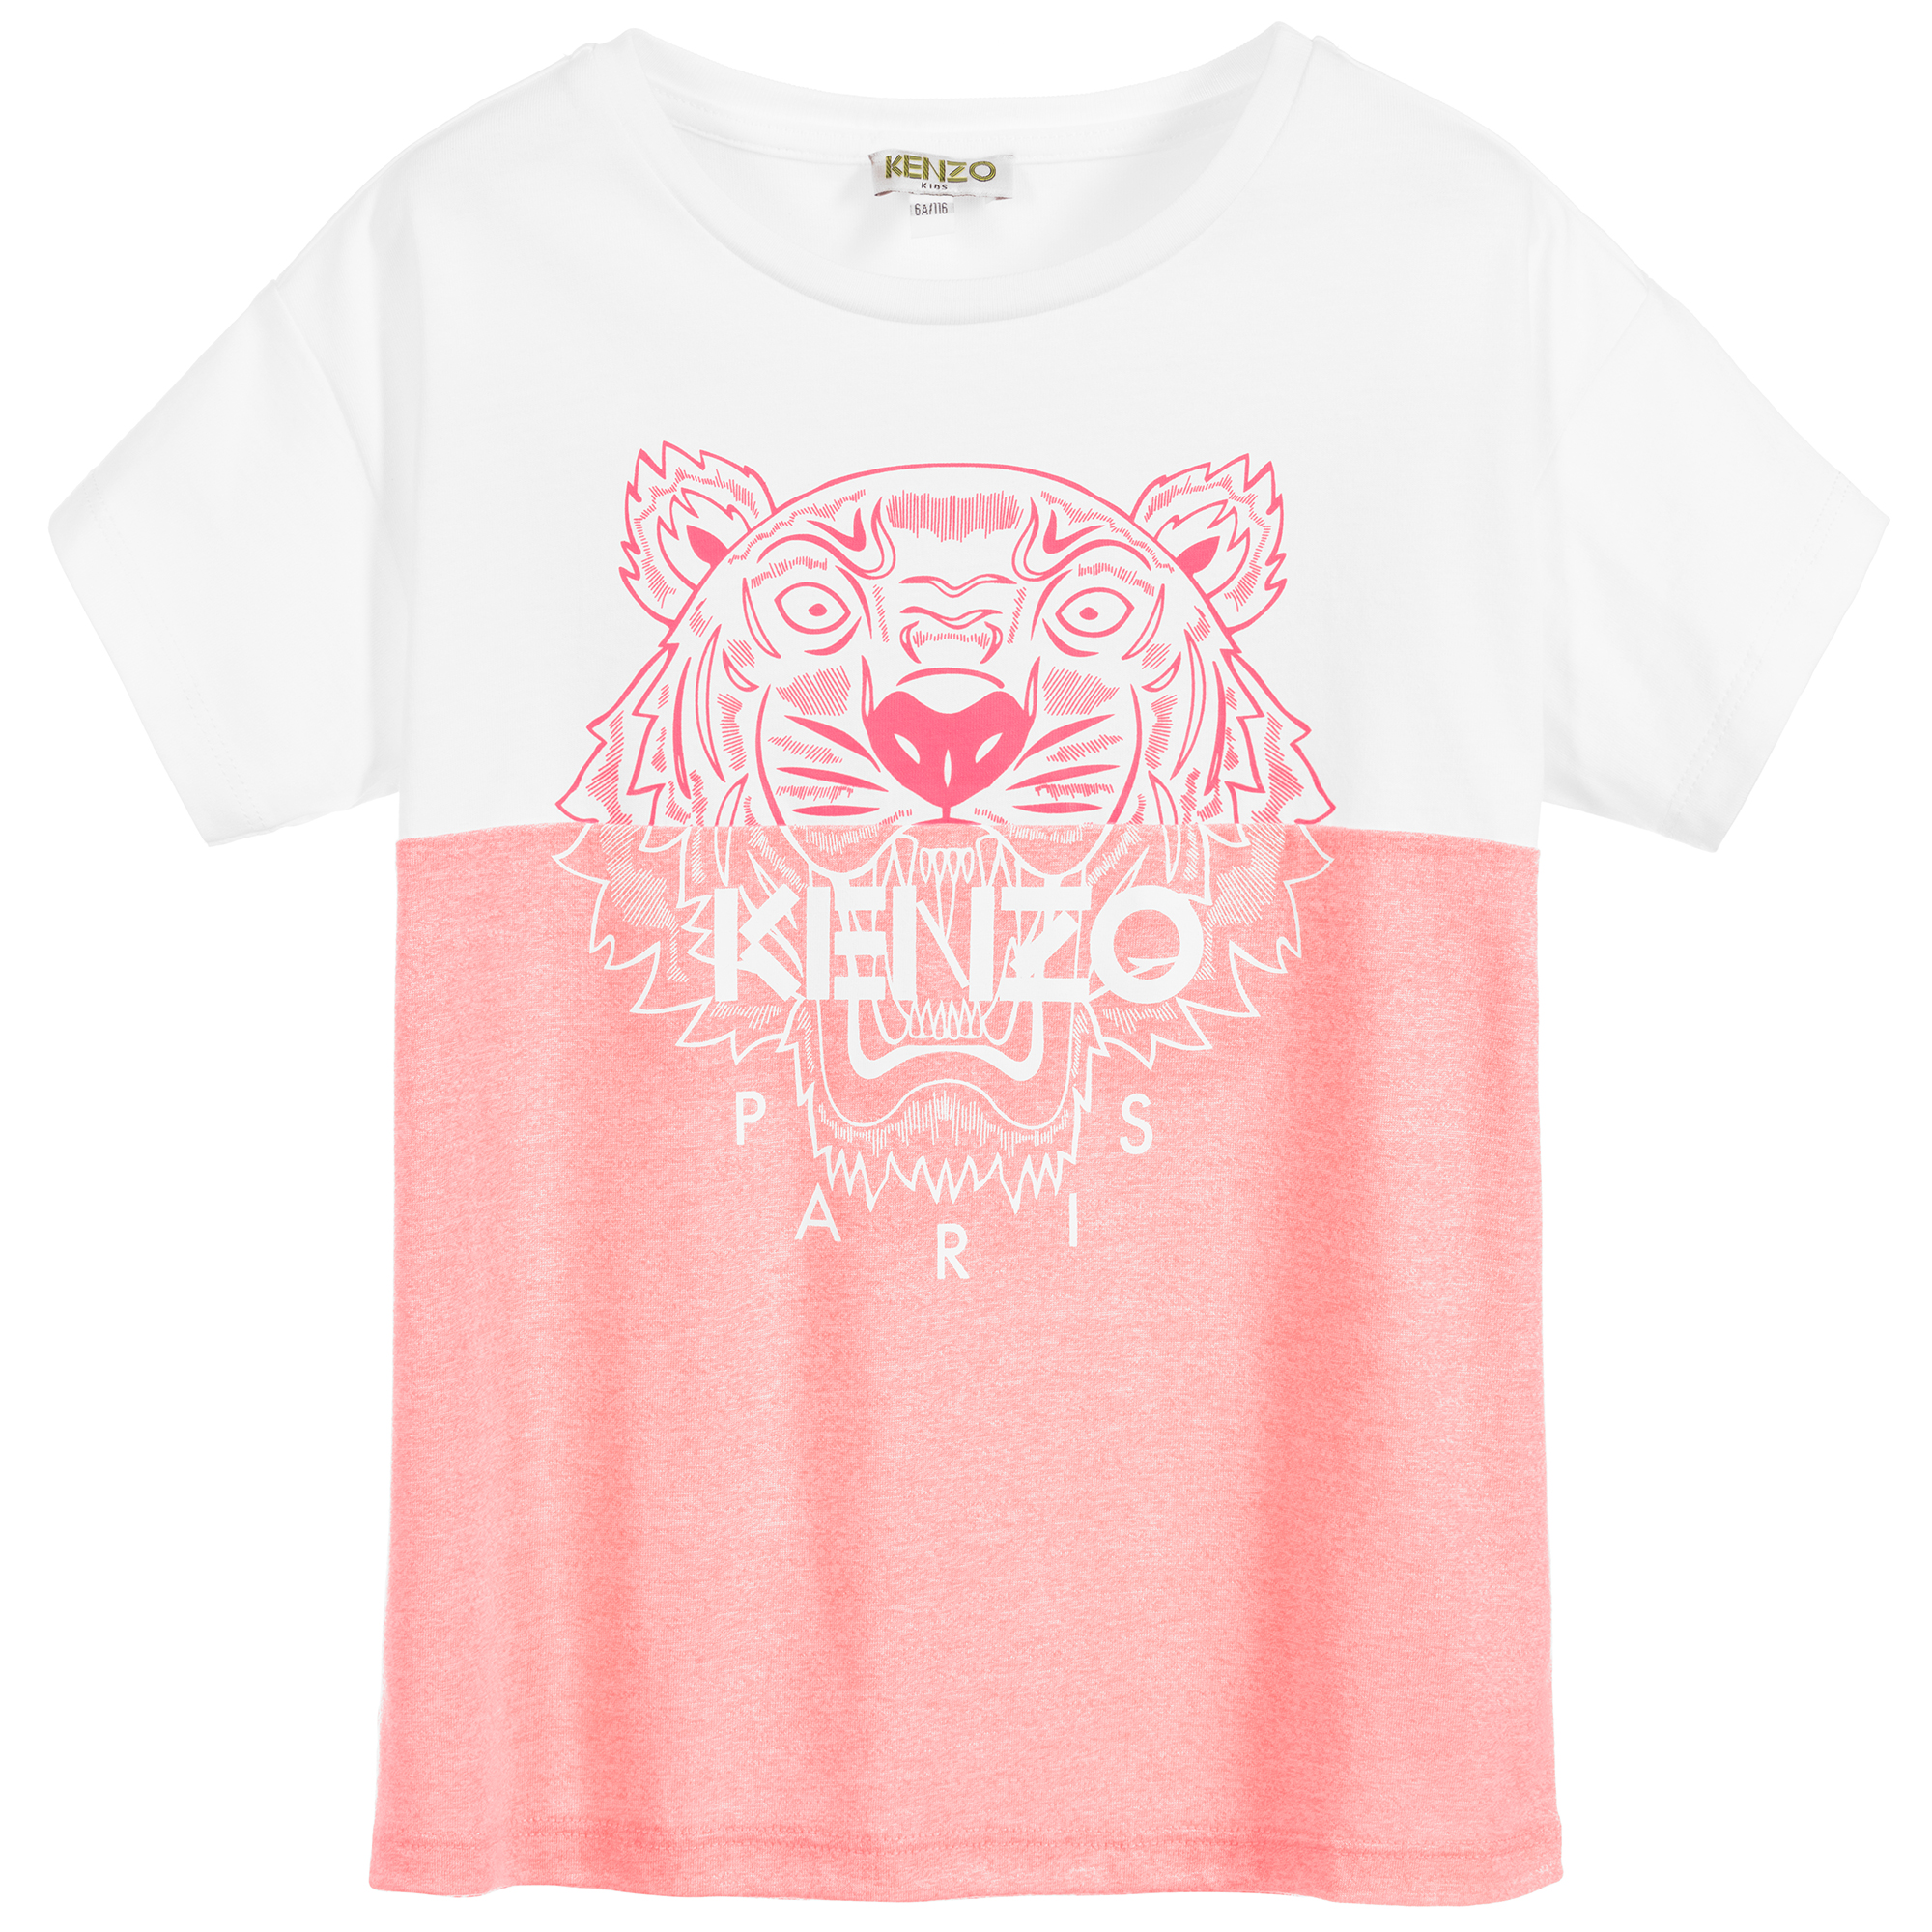 kenzo t shirt girls